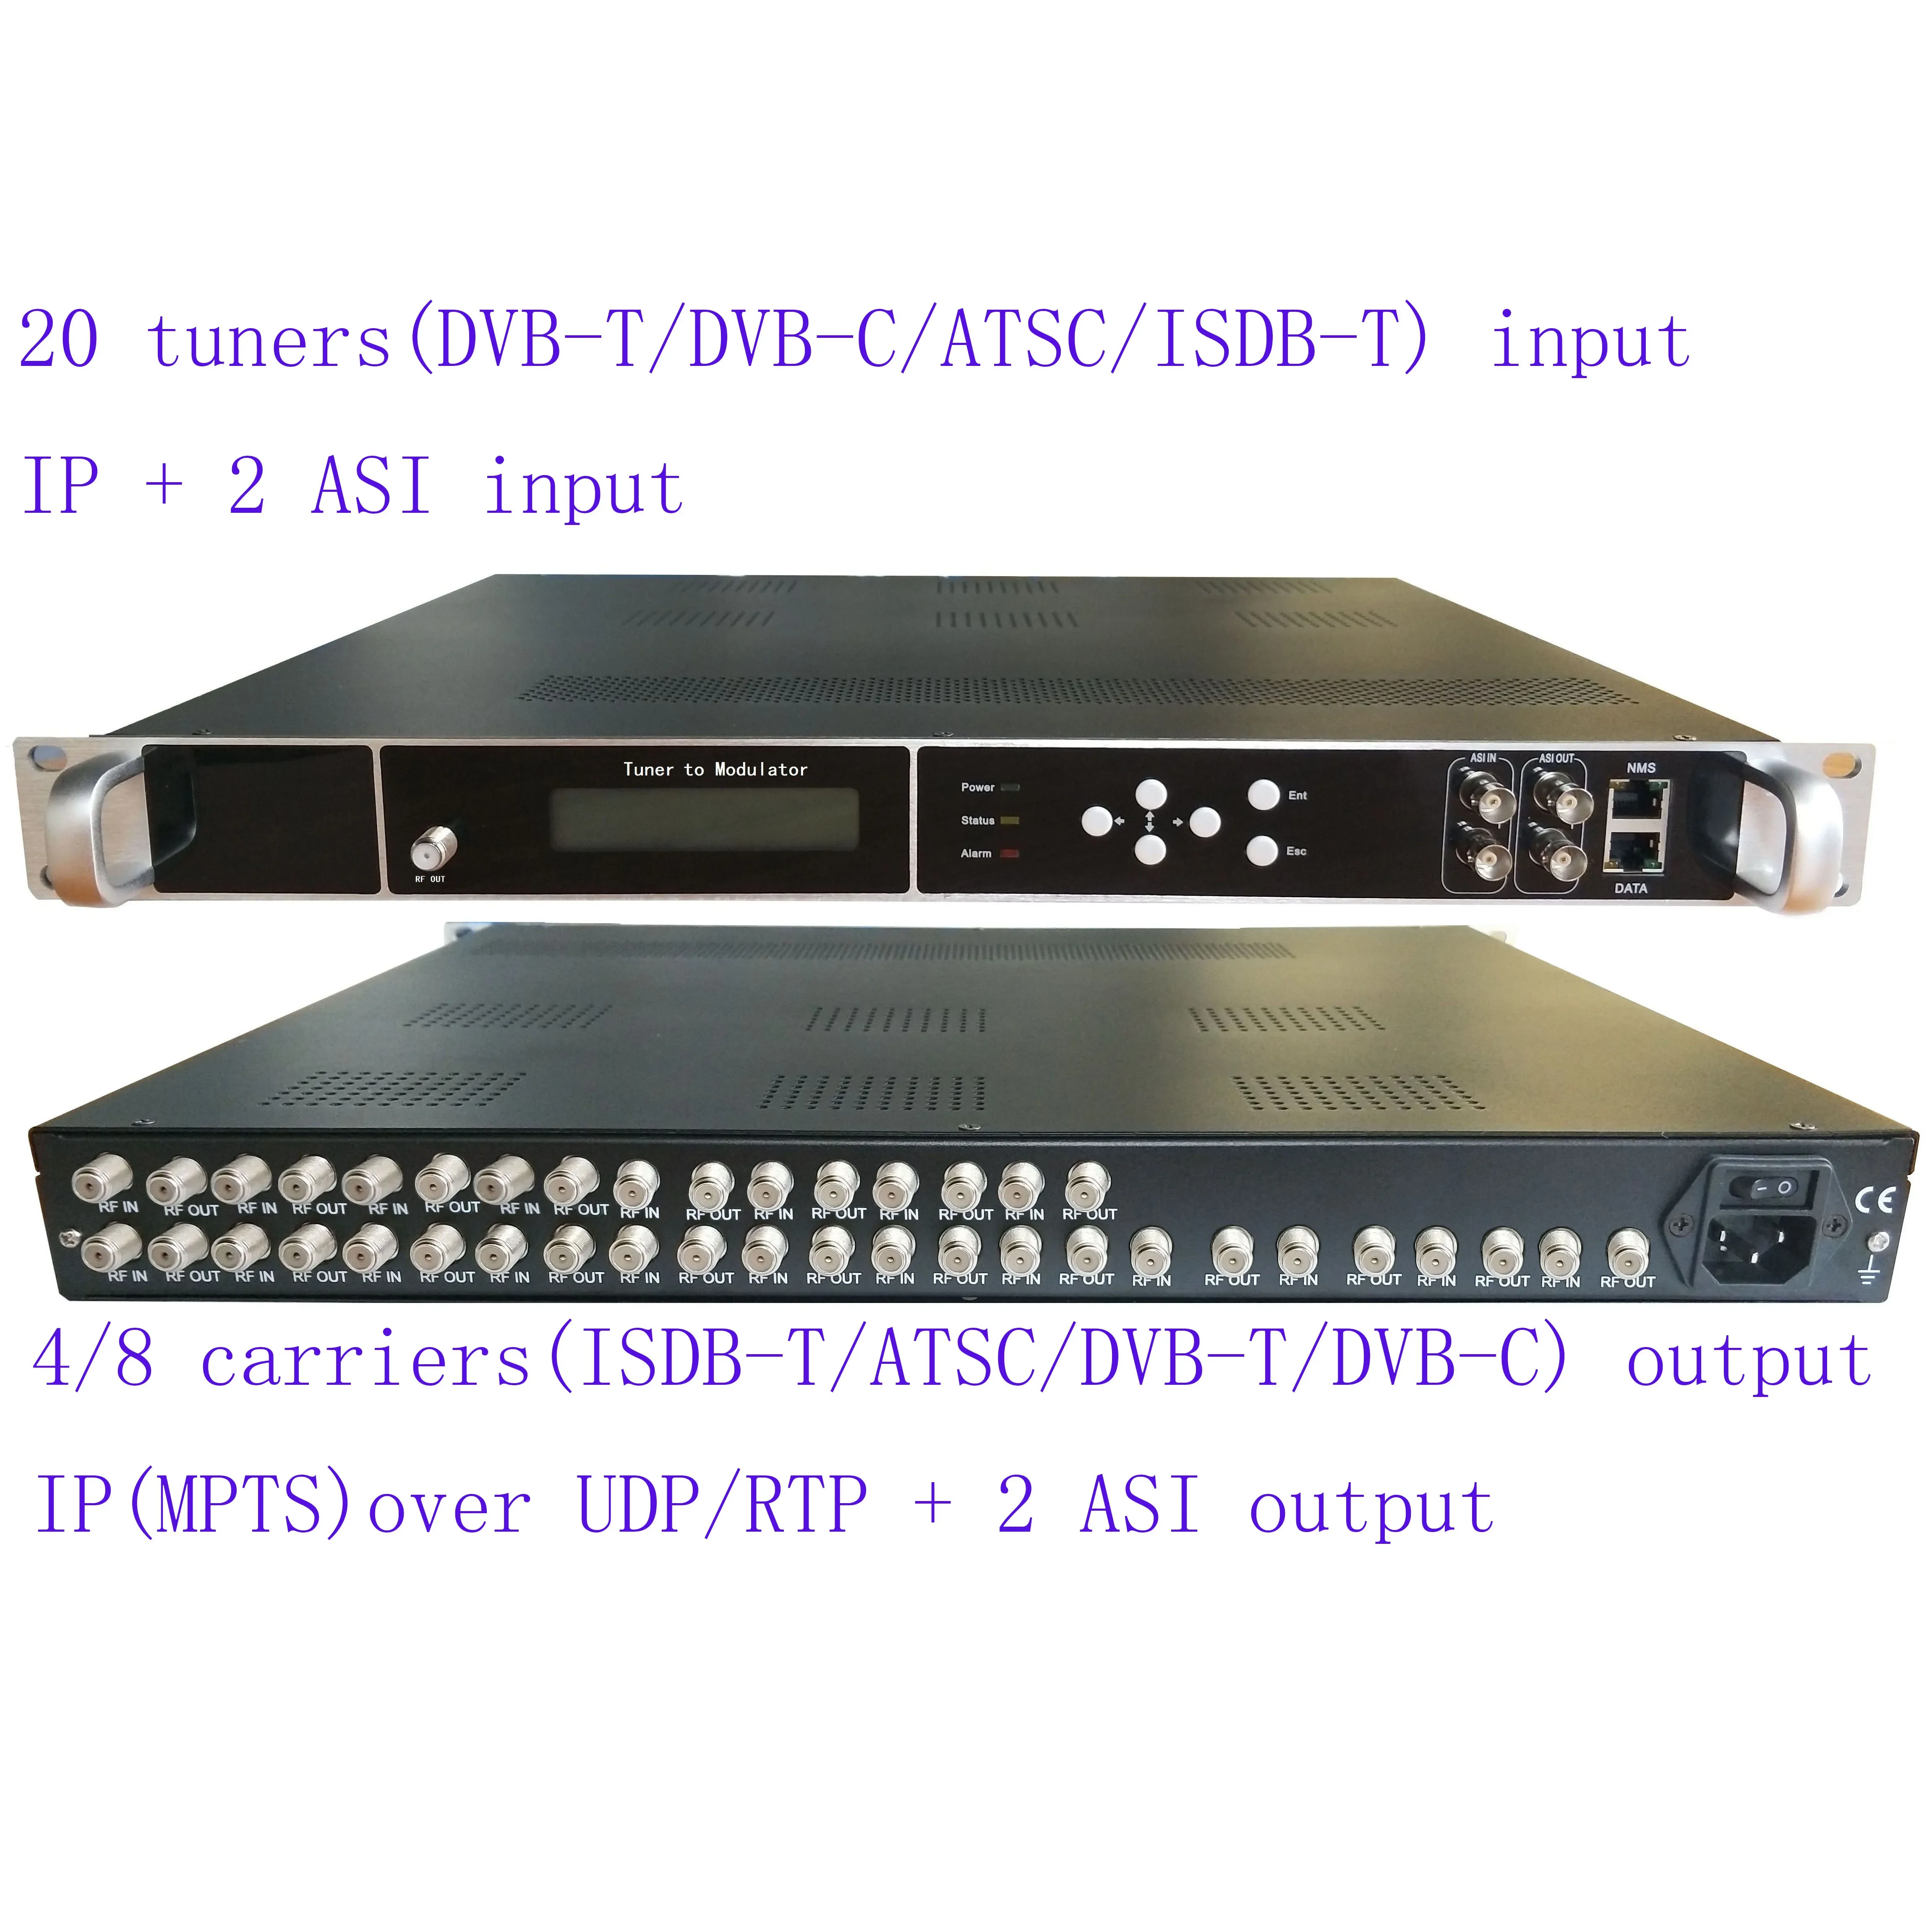 

20 way dvb-s2/S to ISDB-T catv digital modulator, 20 way ISDB-T tuner to ISDB-T RF modulator, TV headend for hotel/hospital